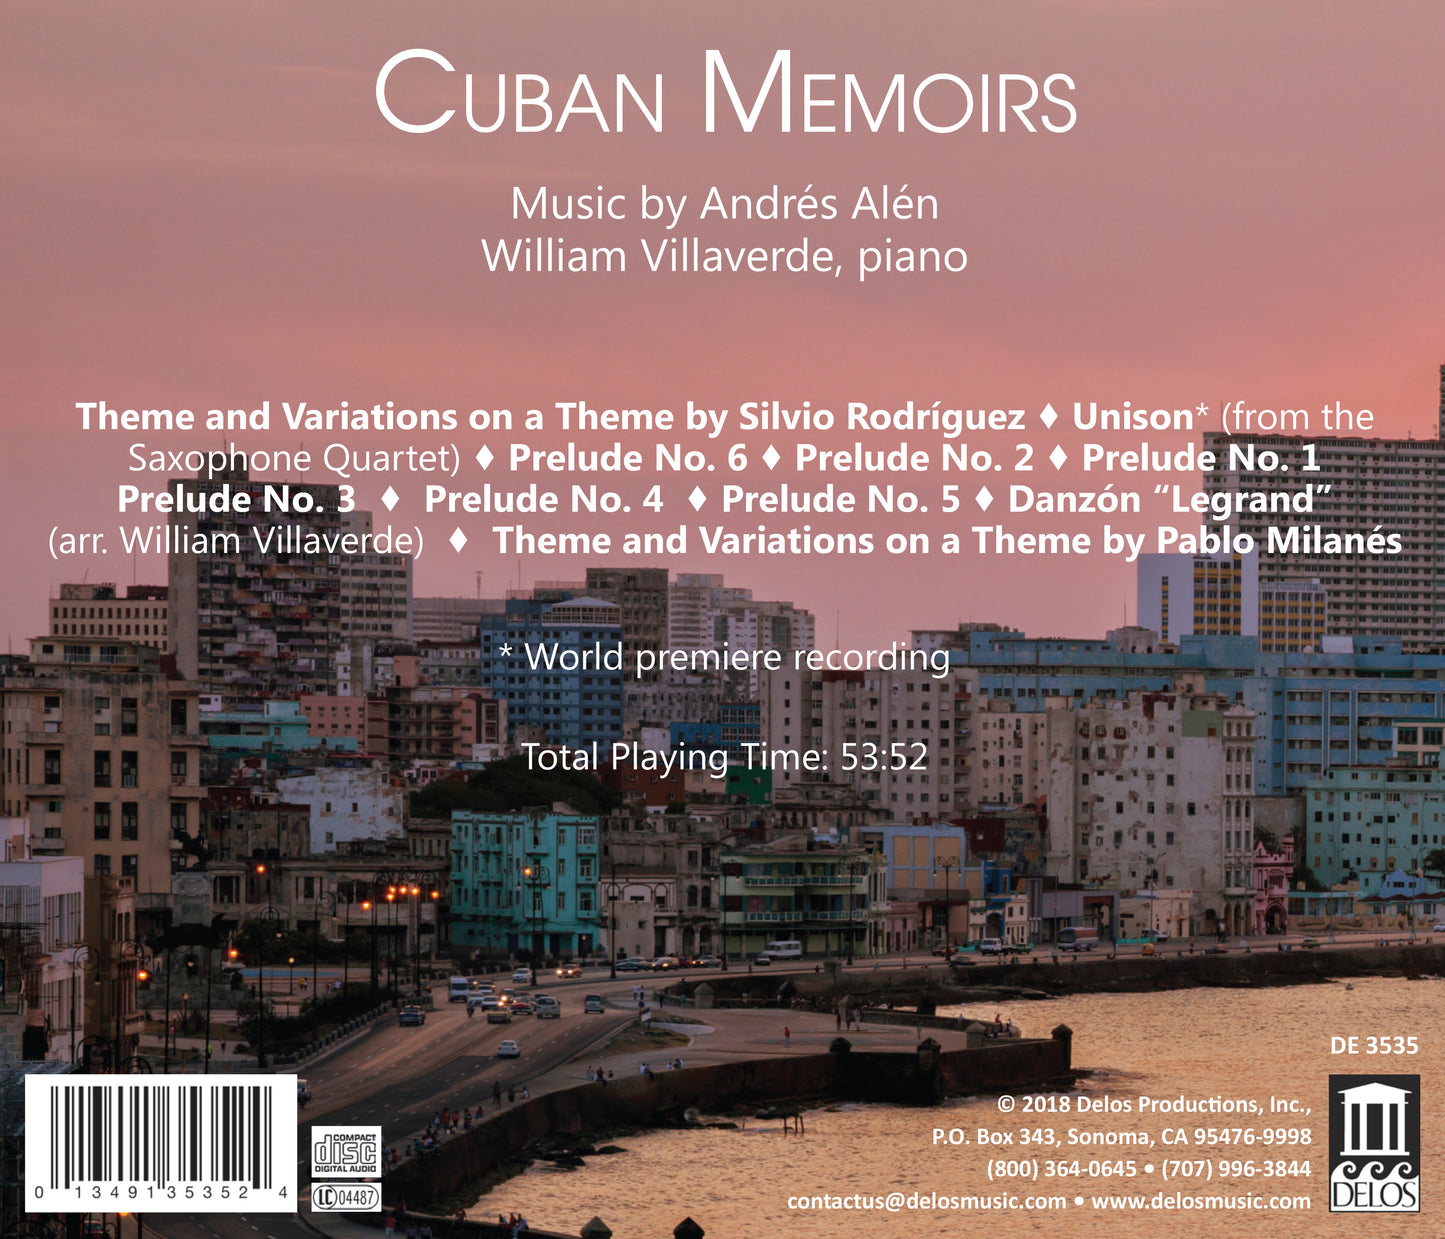 Cuban Memoirs / Wiliam Villaverde